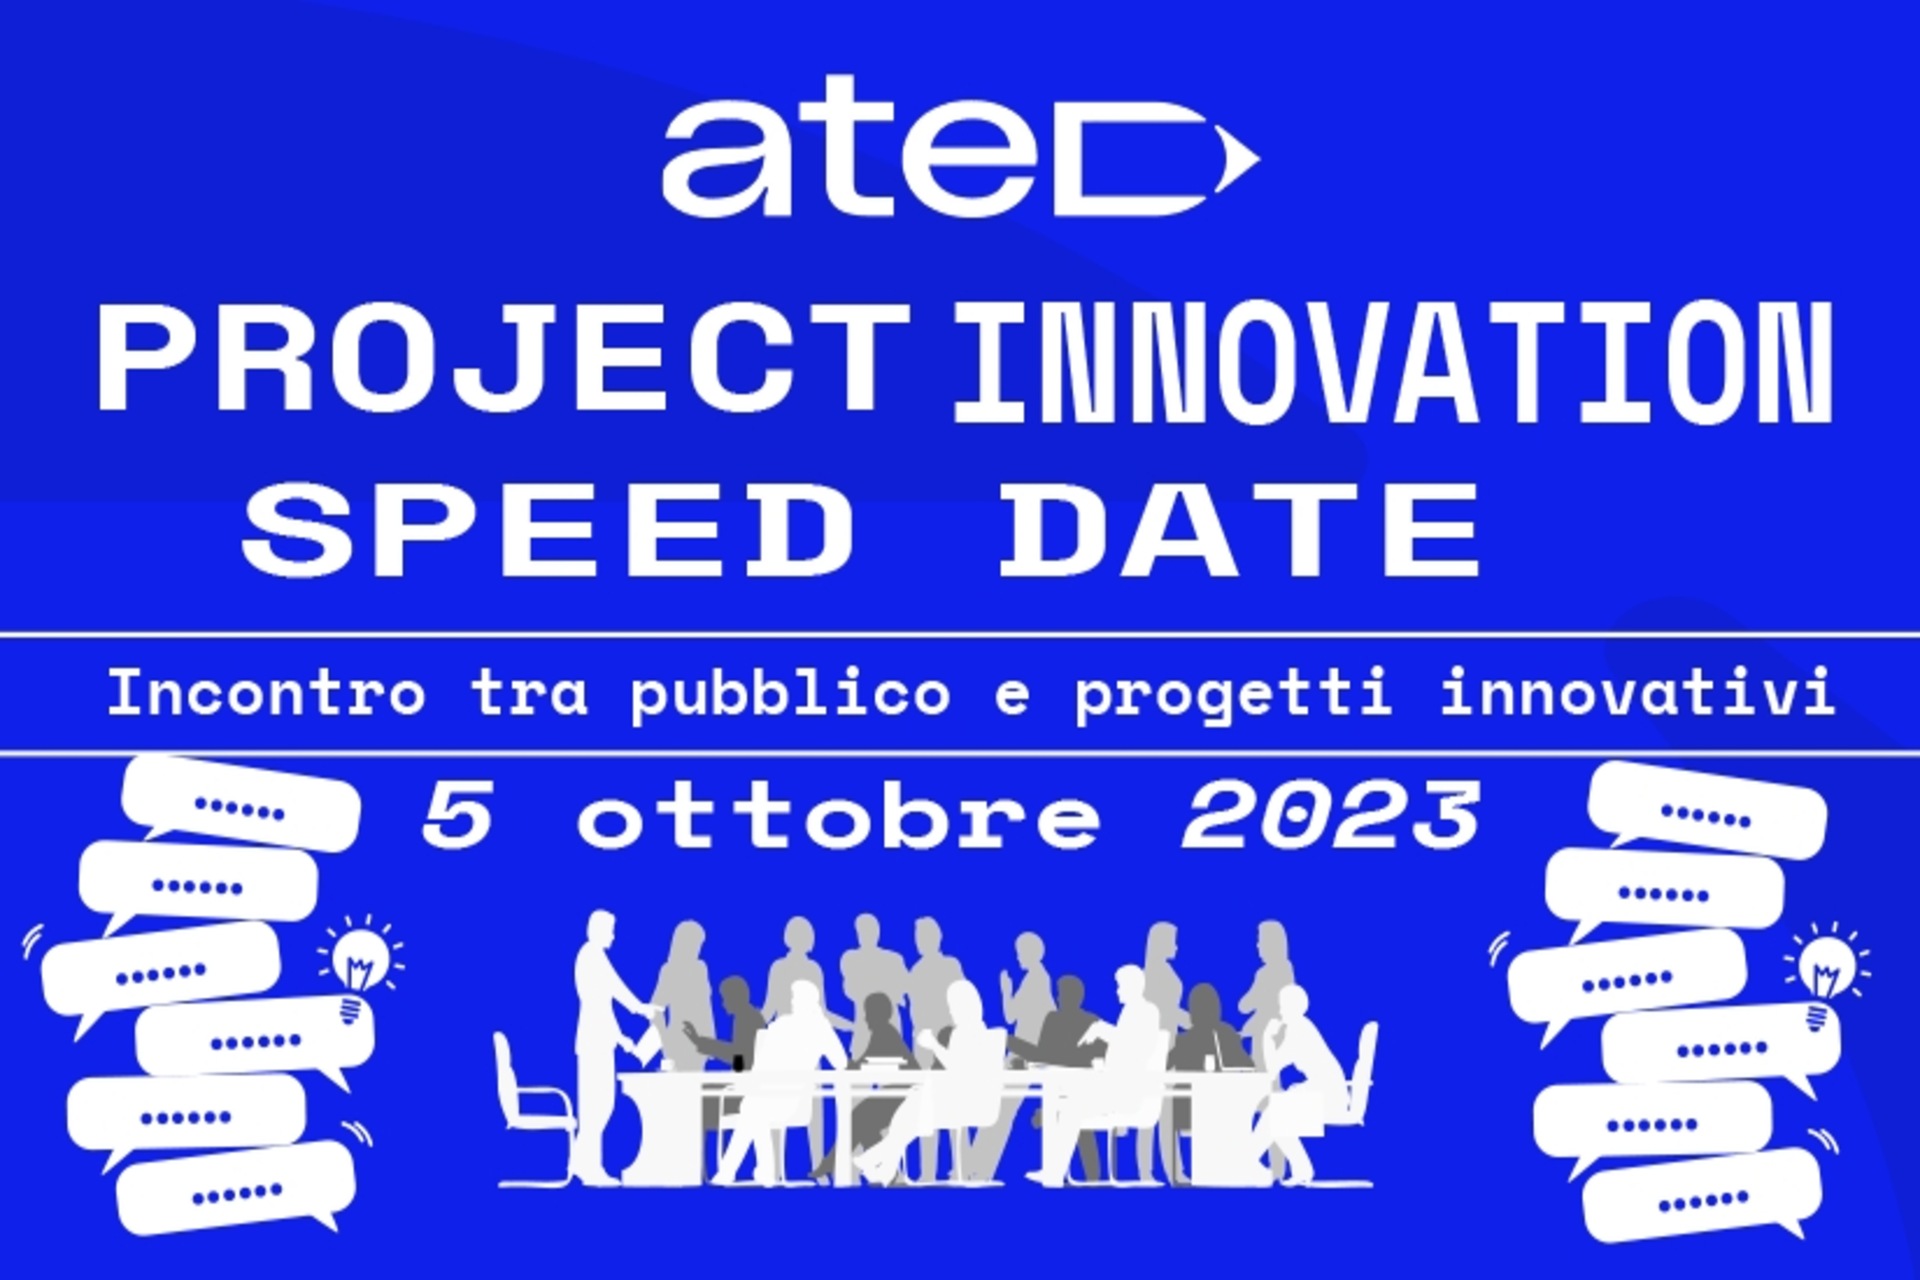 ATED Project Innovation Speed ​​Date : affiche et visuel clé